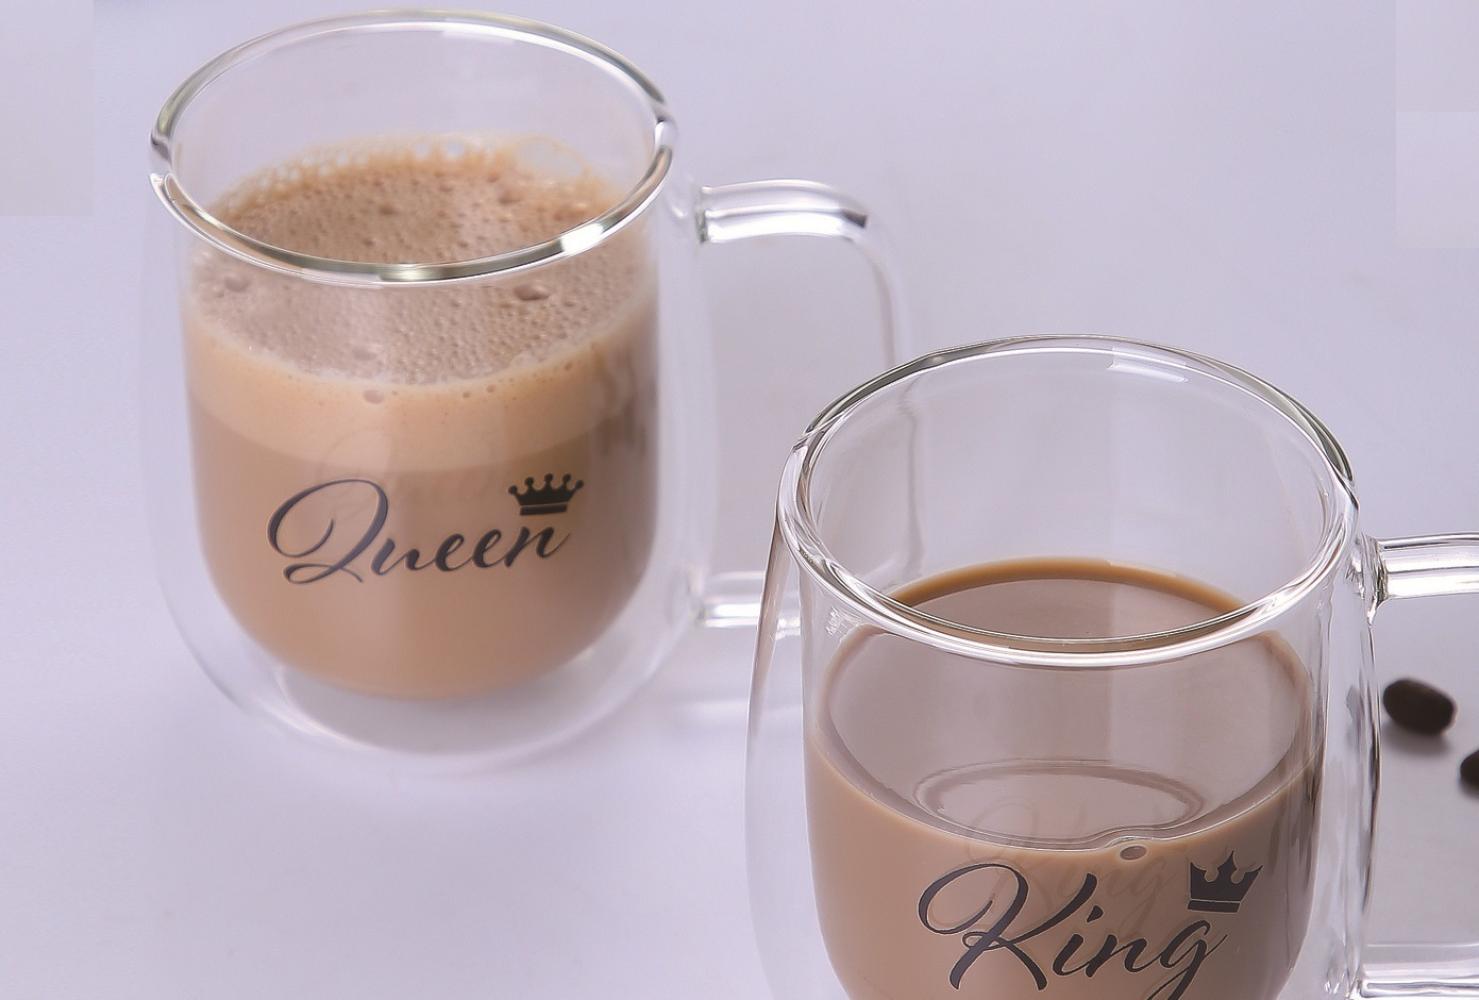 2er Doppelwand Teegläser 300 ml Kaffeegläser mit Henkel "Queen & King" Camli Bardak transparent Bild 1